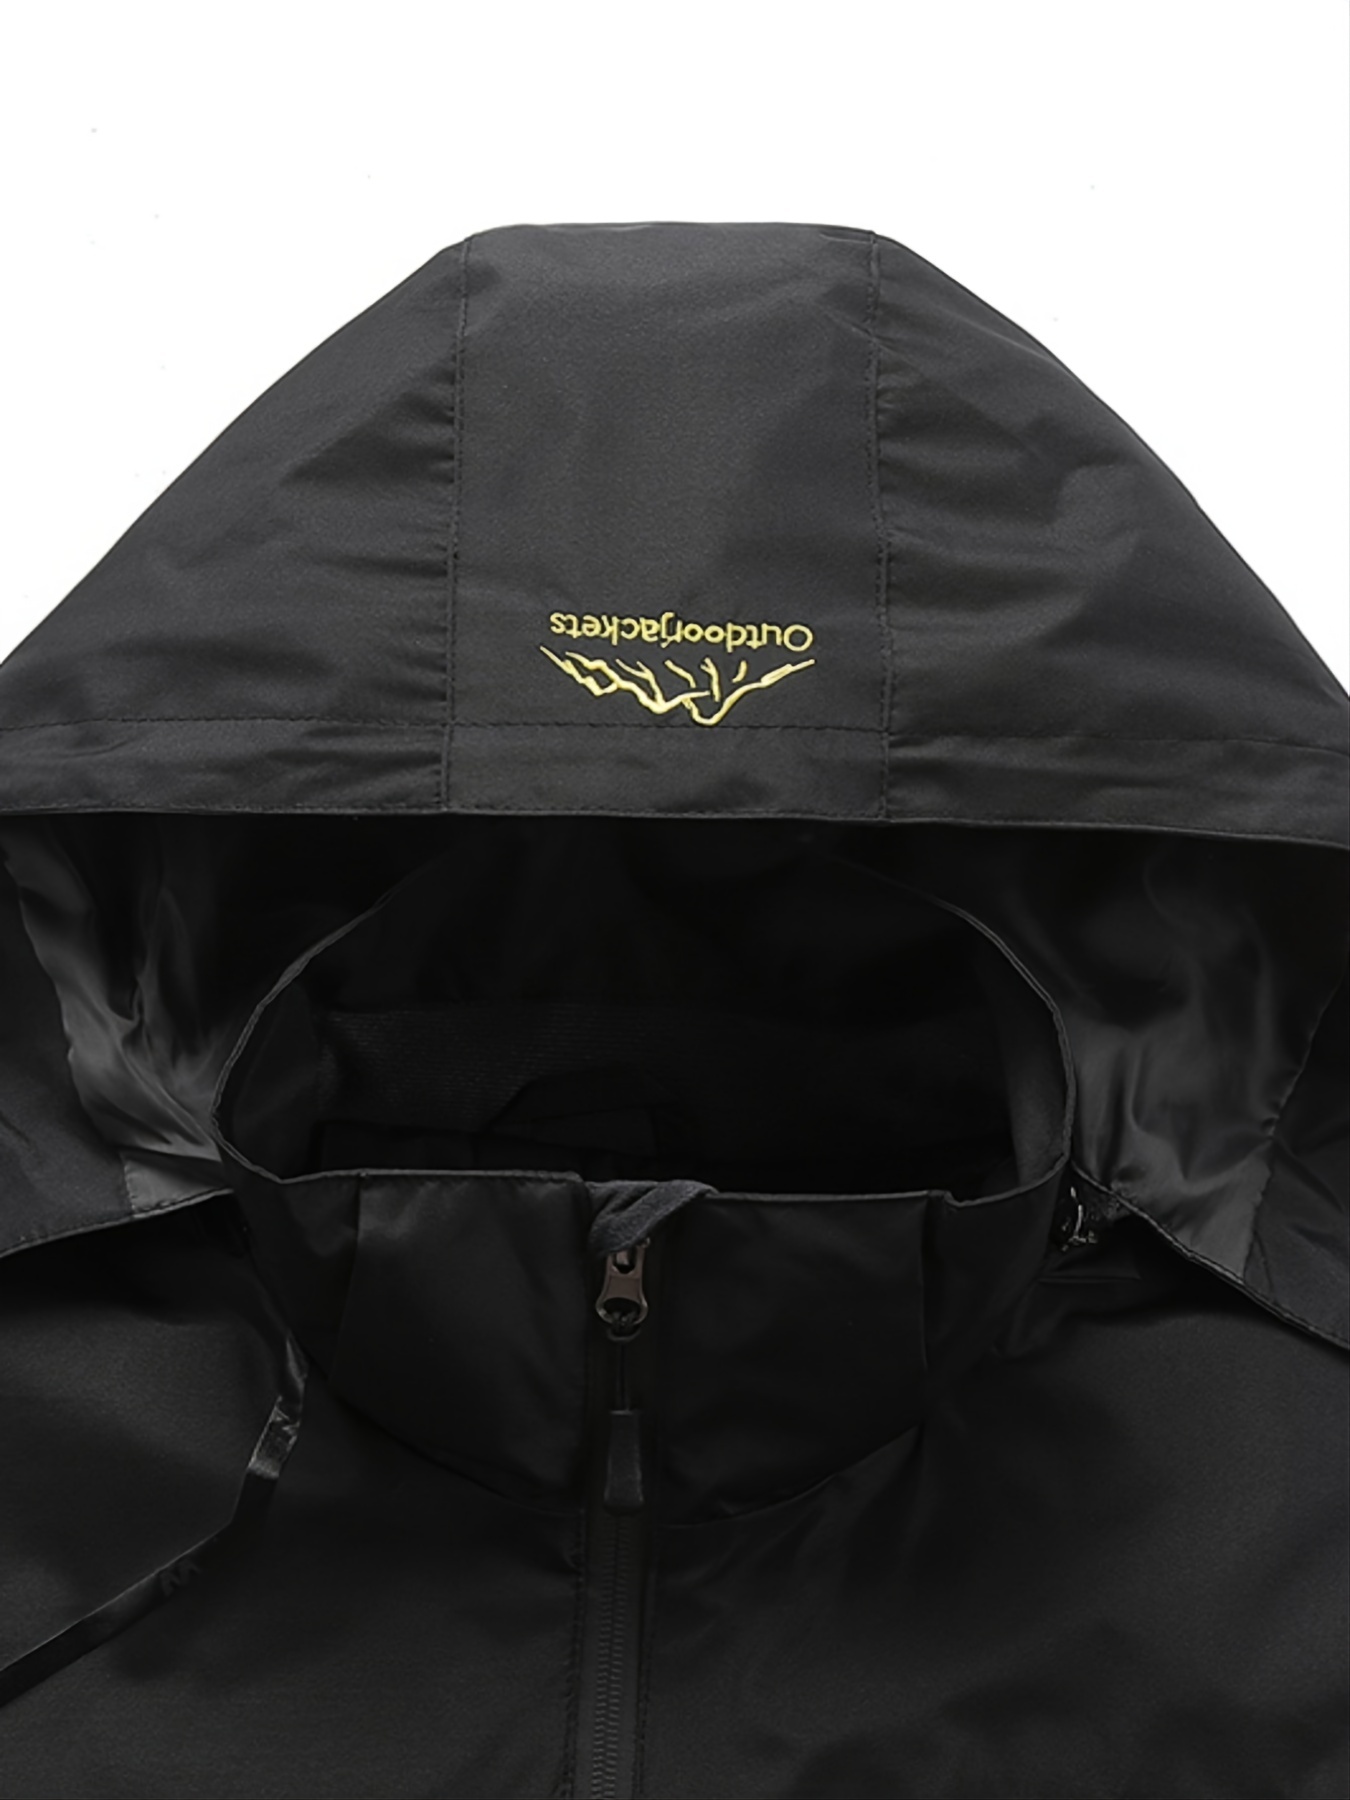 mens waterproof rain jacket lightweight raincoat windbreaker with hood for hiking travel outdoor details 7